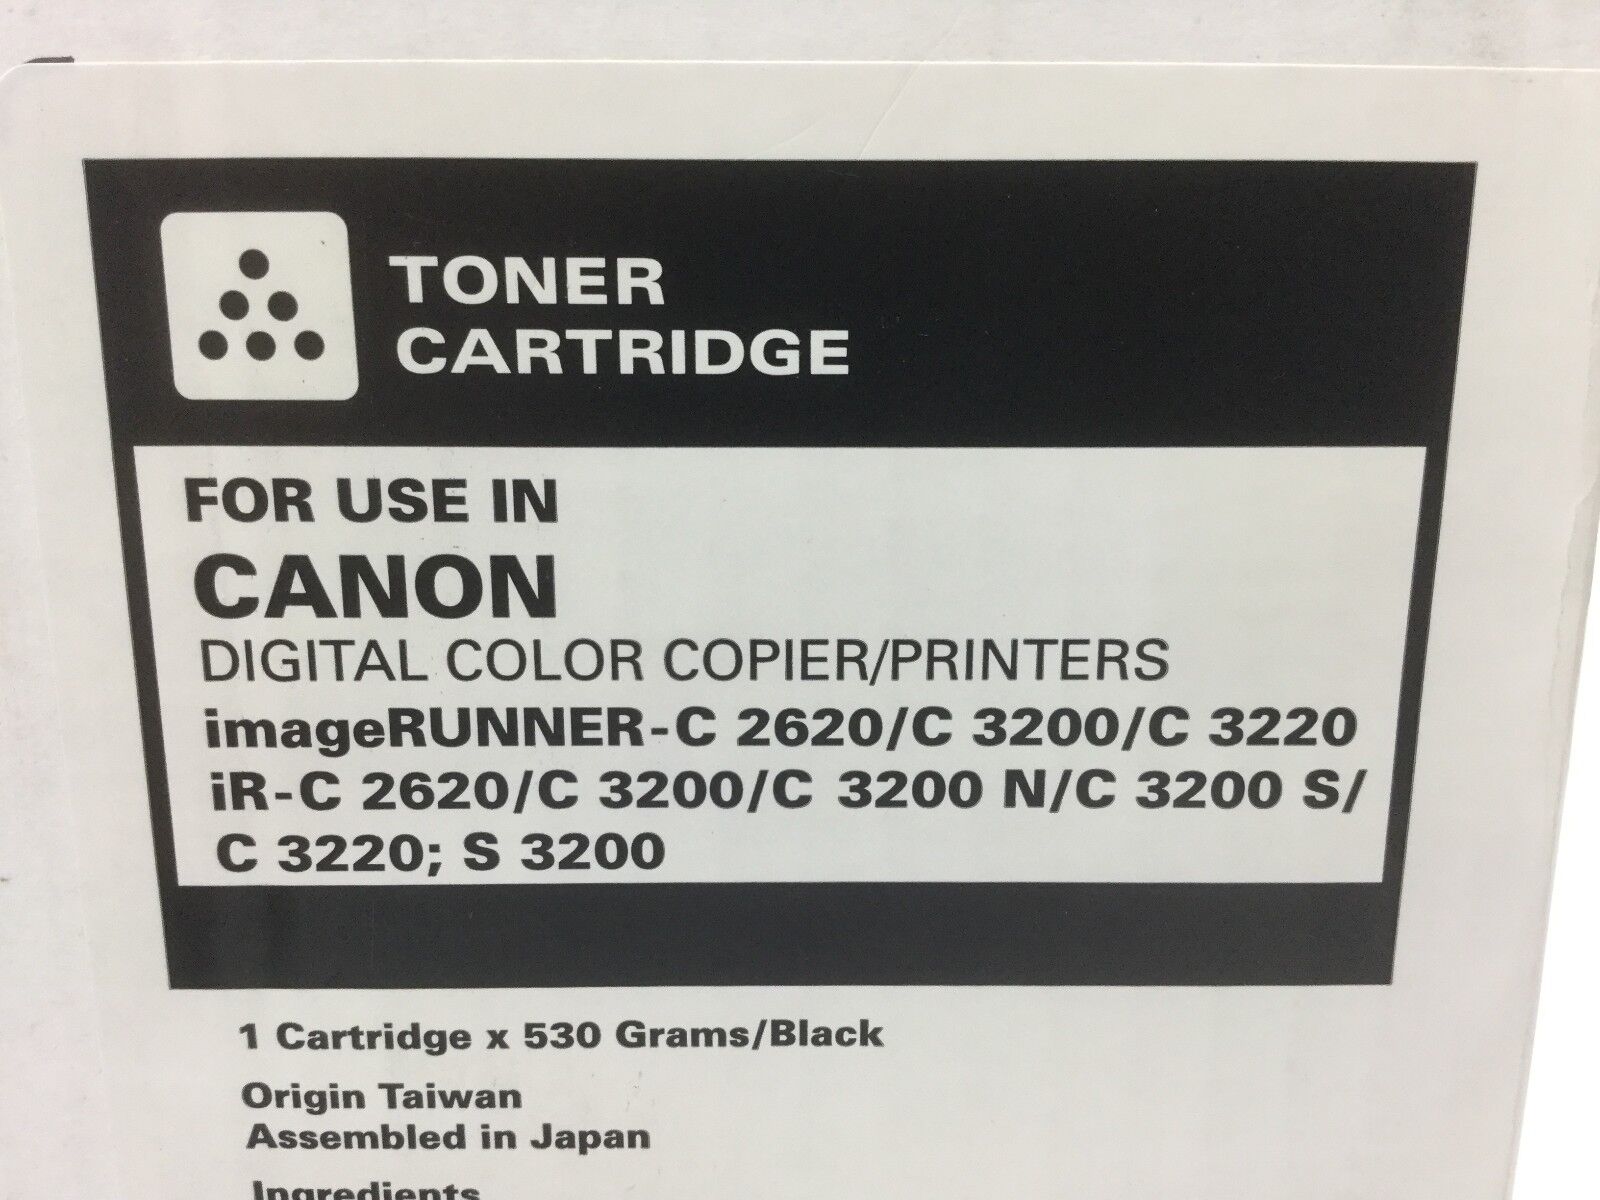 NEW KATUN for CANON ImageRUNNER C2620 C3200 C3220 Toner Cartridge Black